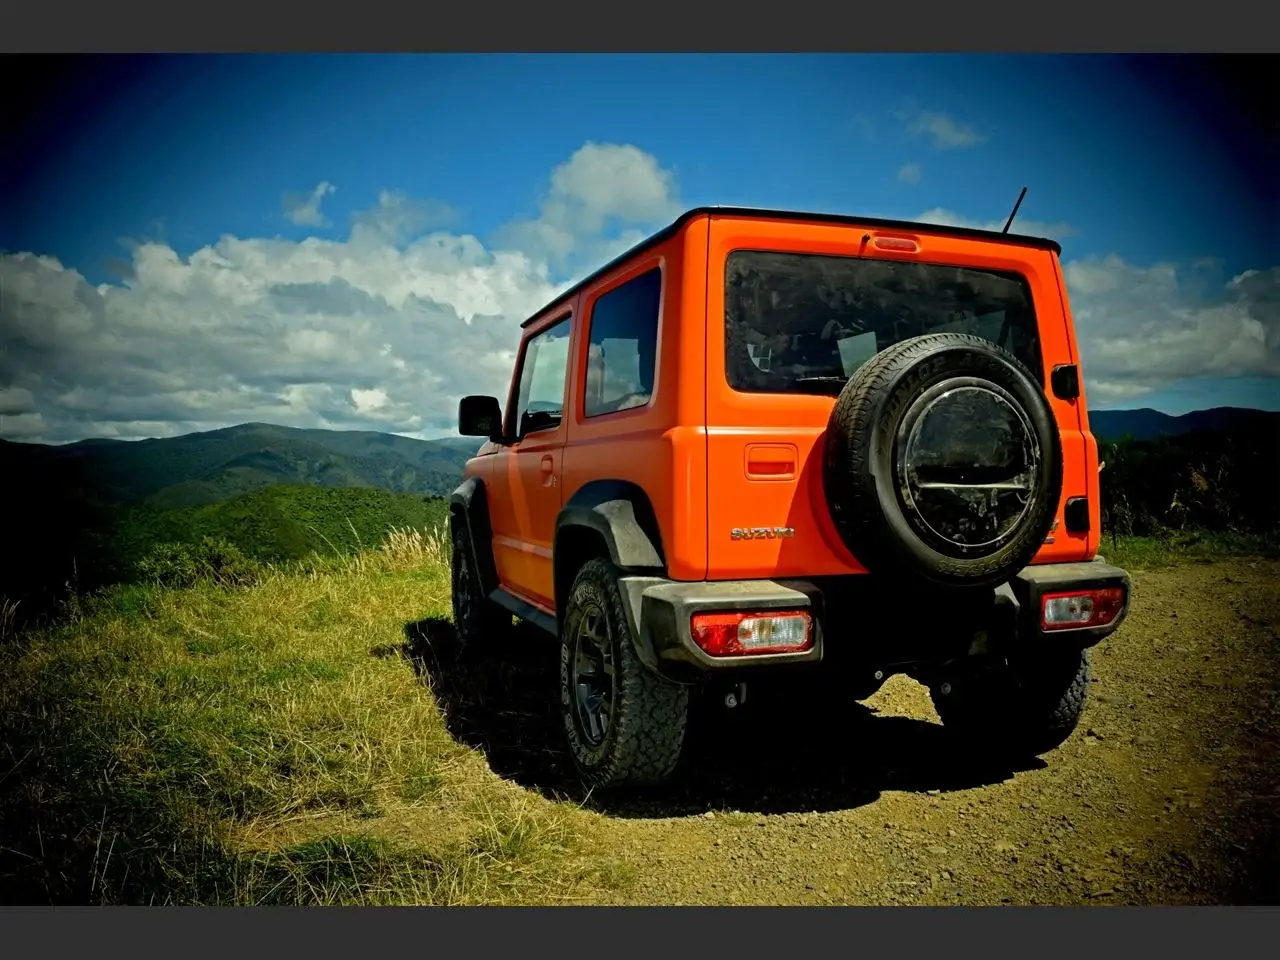  Suzuki Jimney for Sale in Kenya